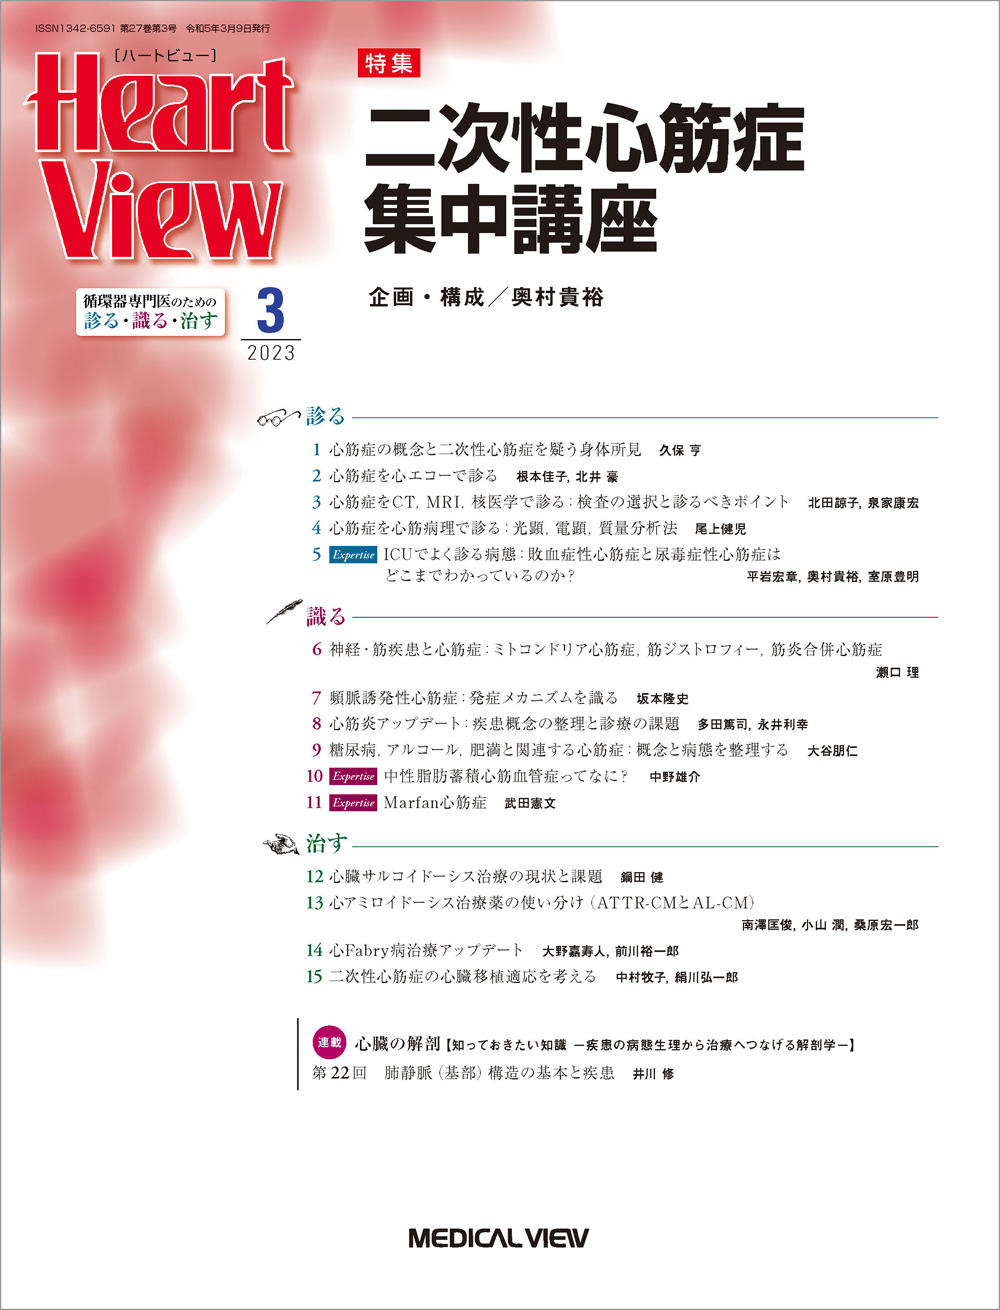 Heart View Vol.27 No.3【電子版】 | 医書.jp